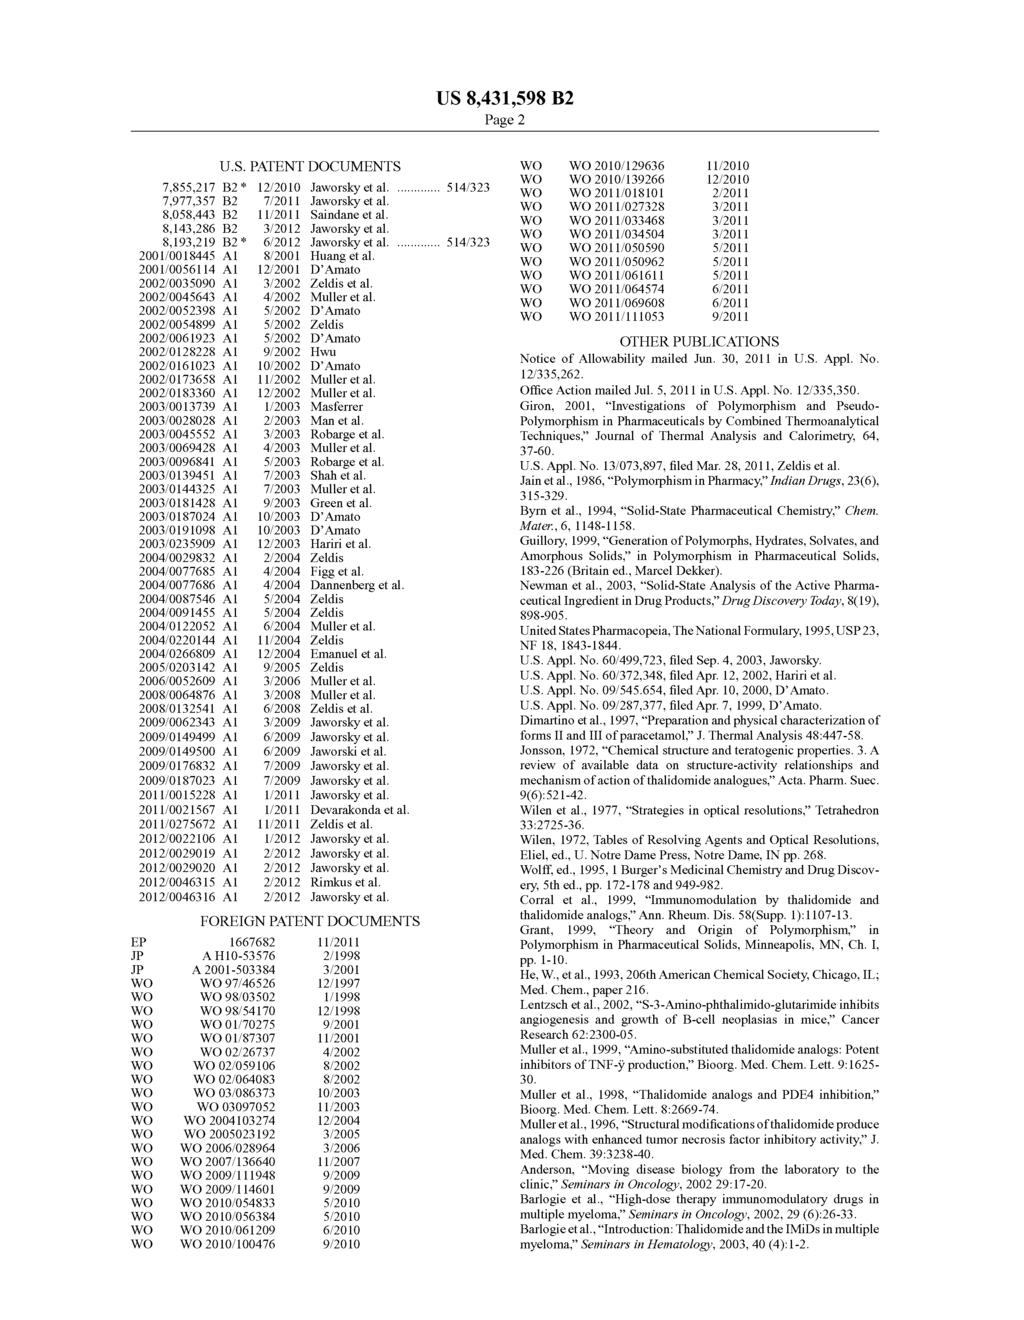 Case 2:18-cv-11518 Document 1 Filed